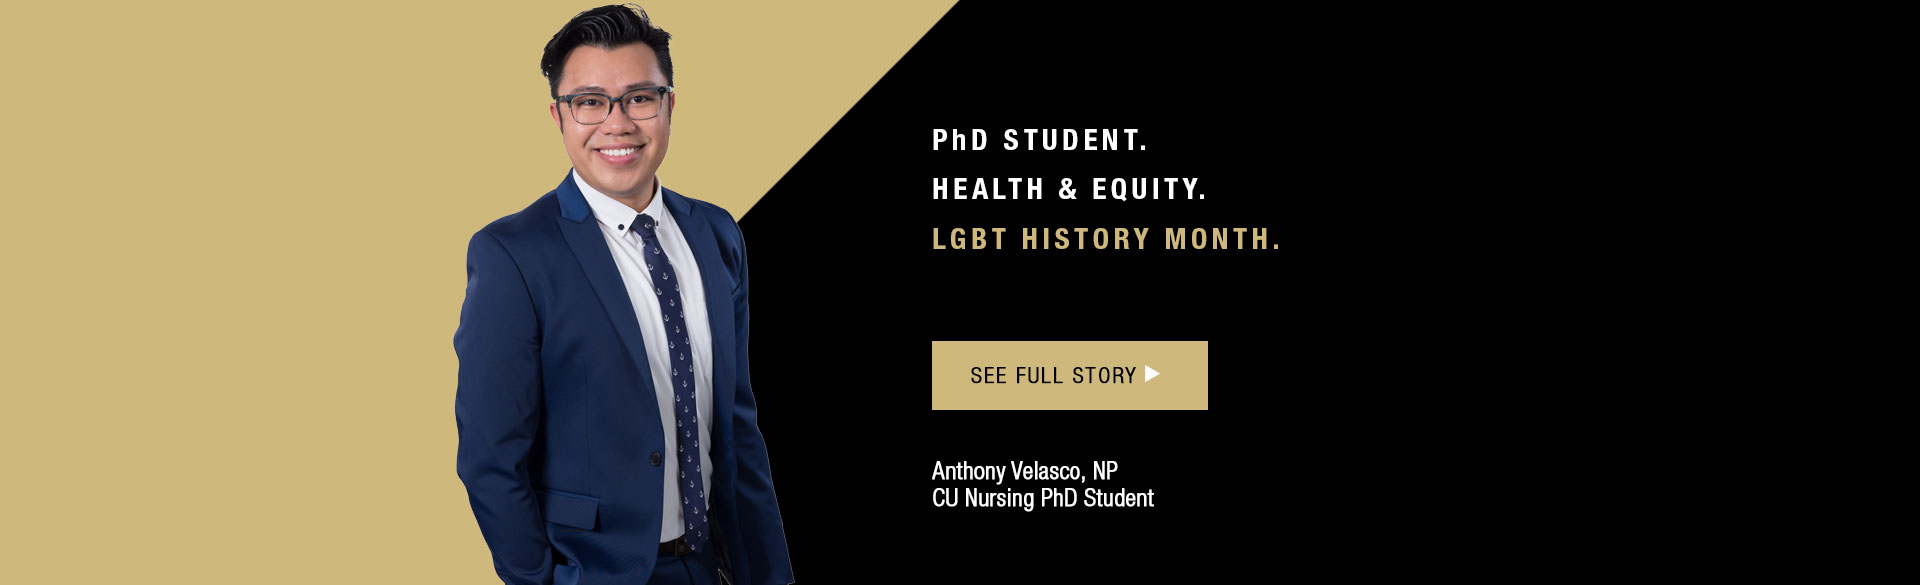 CU College of Nursing PhD Student Anthony Velasco